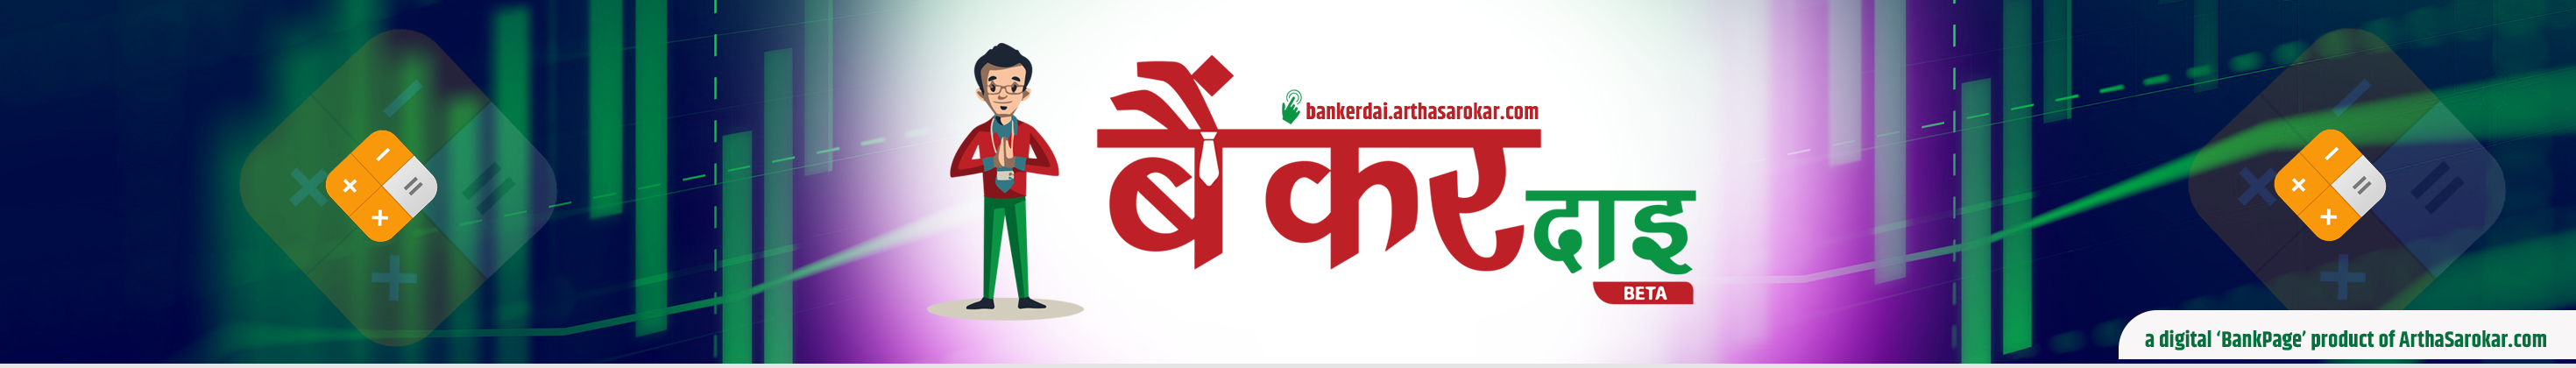 Banker Dai by Arthasarokar Header Image